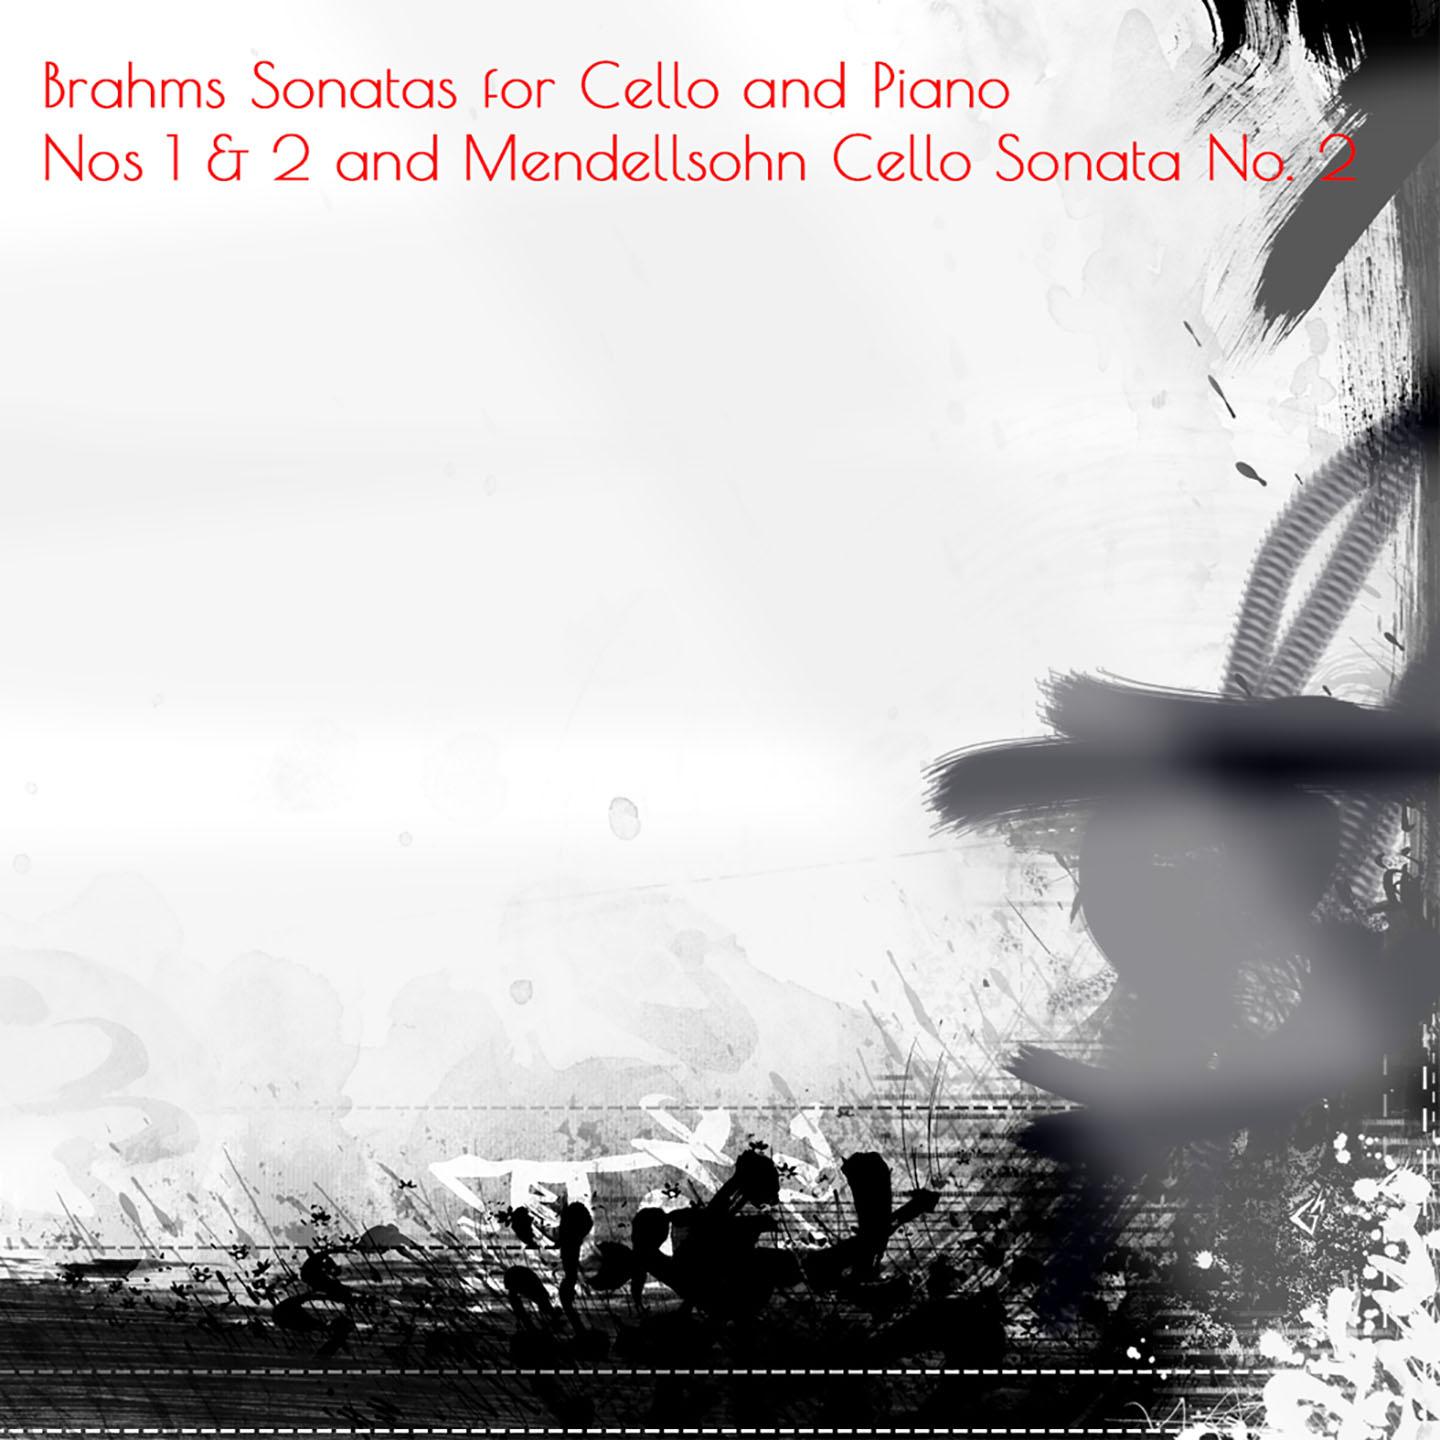 Brahms Sonatas for Cello and Piano Nos 1 & 2 and Mendellsohn Cello Sonata No. 2专辑